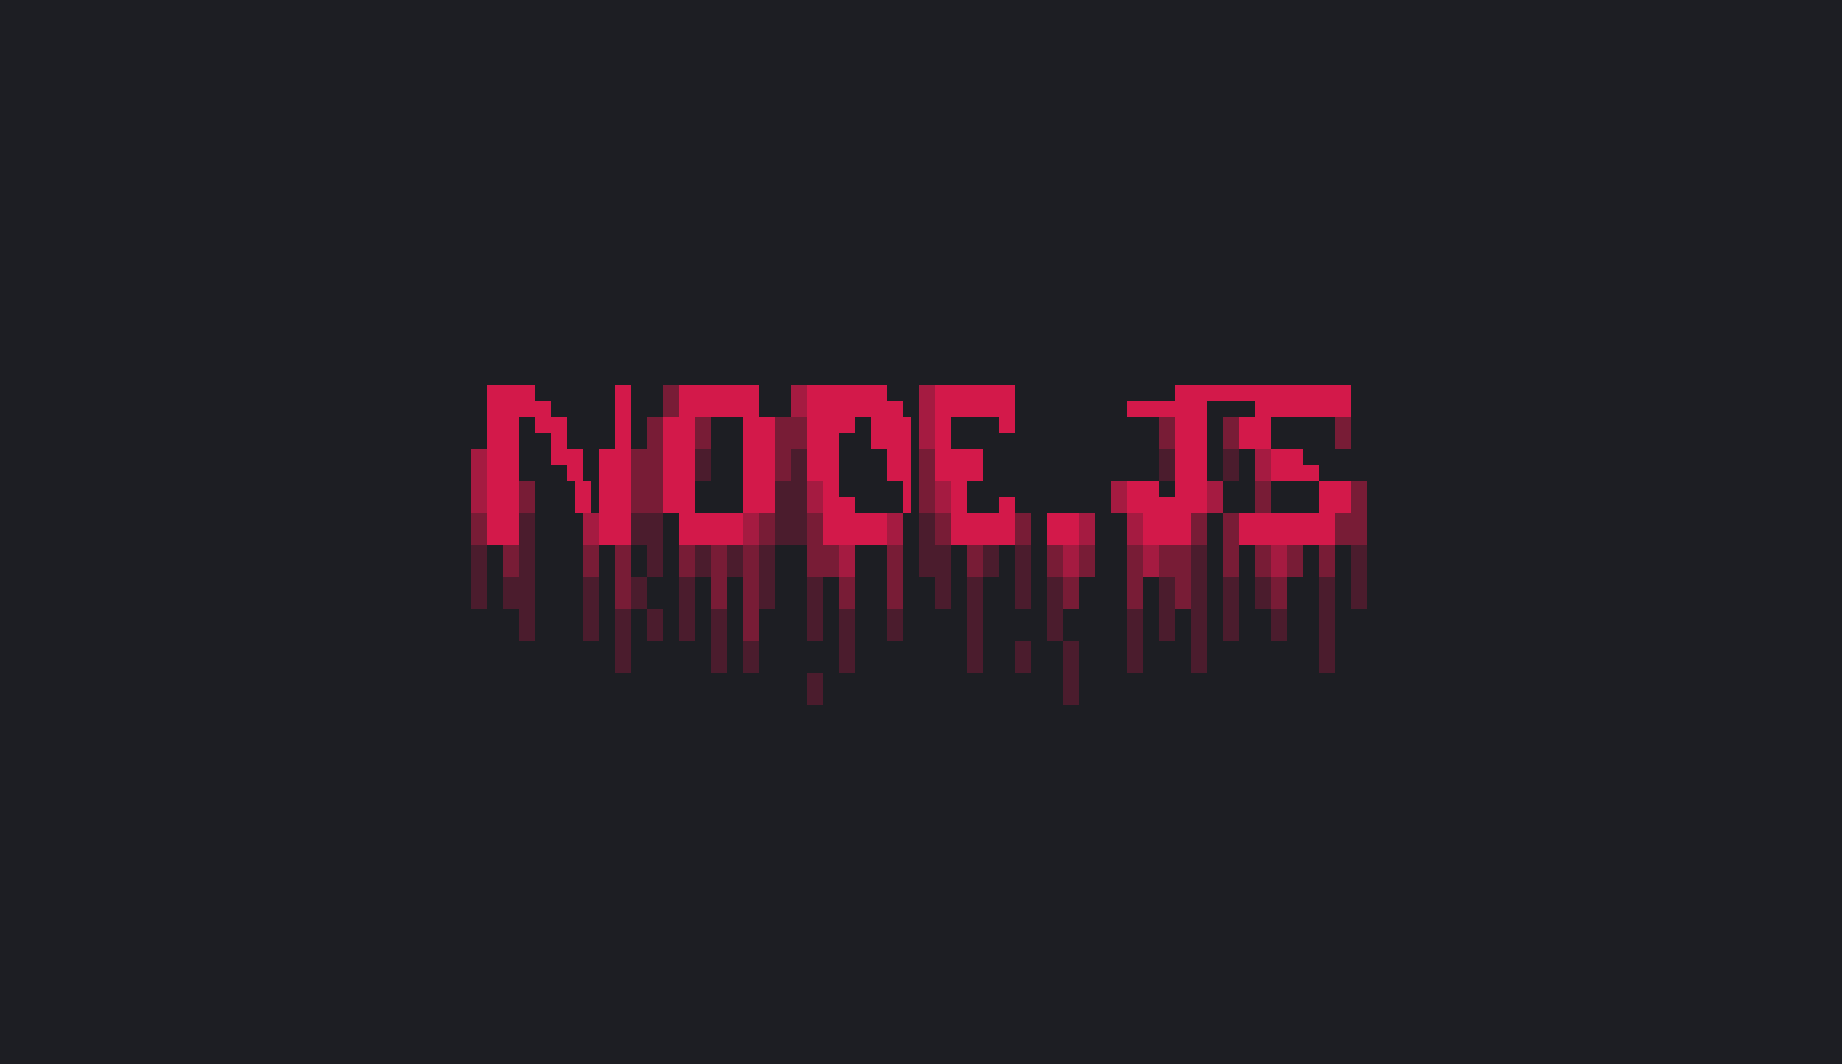 The Advantages of Using Node.js for Back-End Development